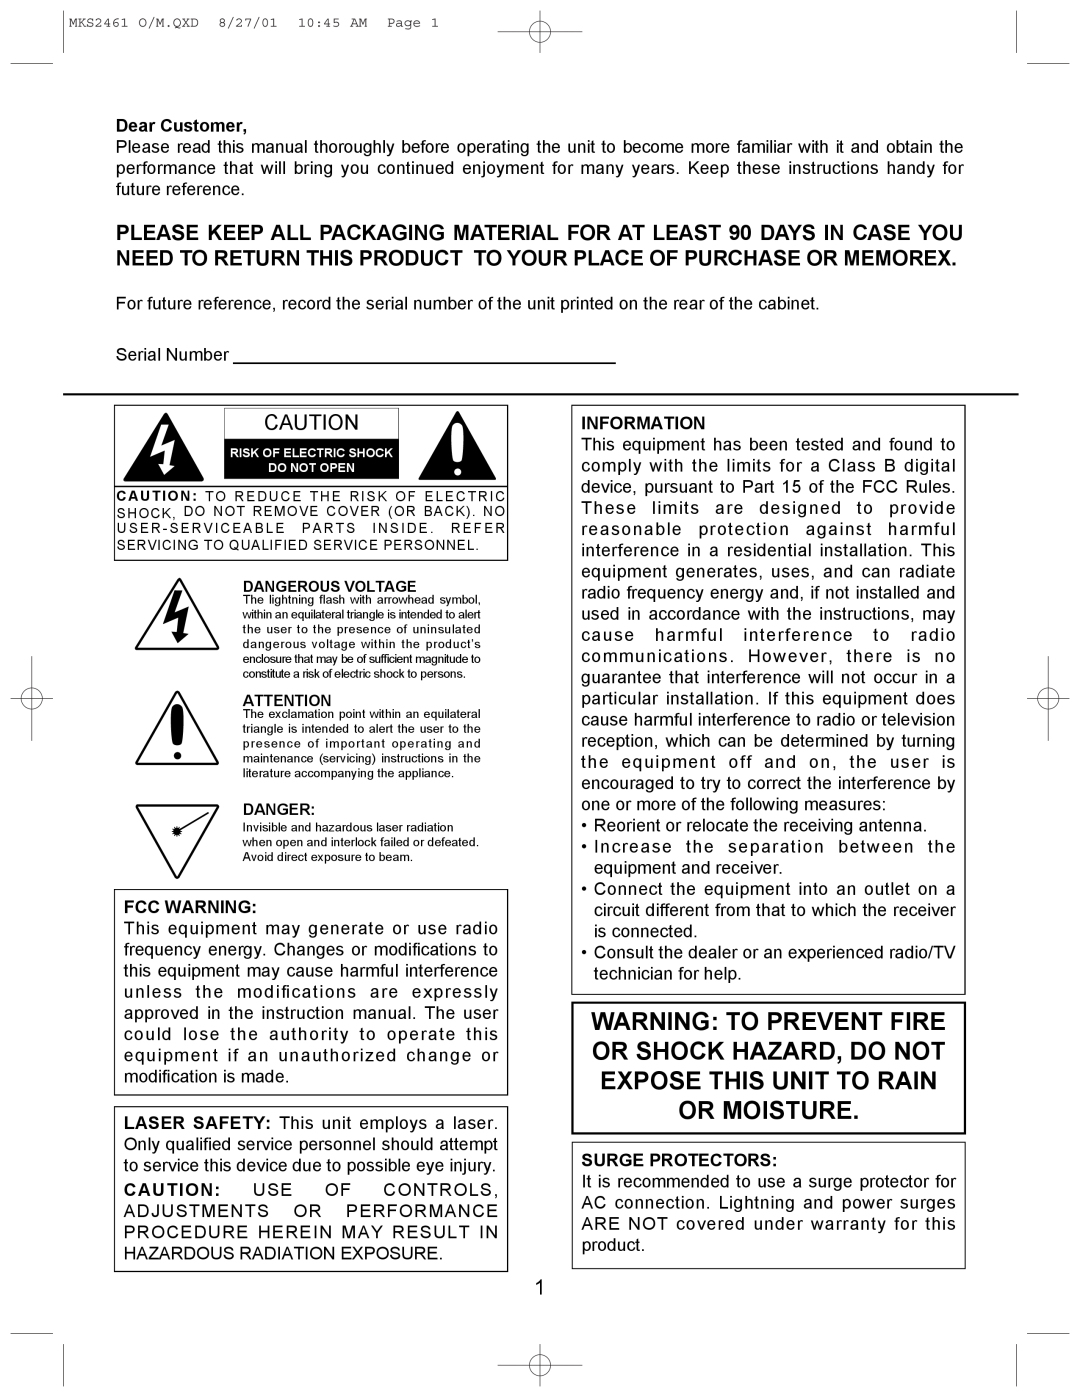 Memorex MKS2461 operating instructions Fcc Warning, Information, Surge Protectors 